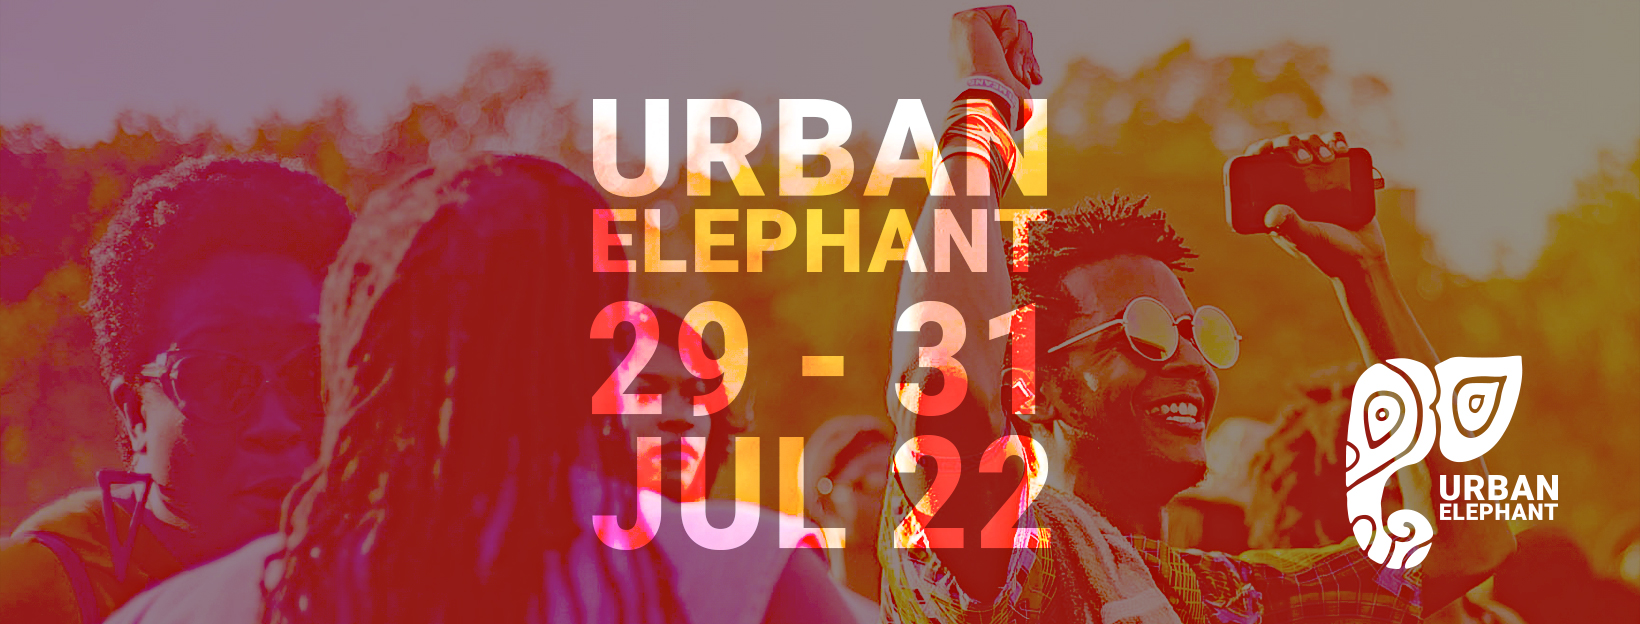 Urban Elephant Festival 29th July - 31st July 2022